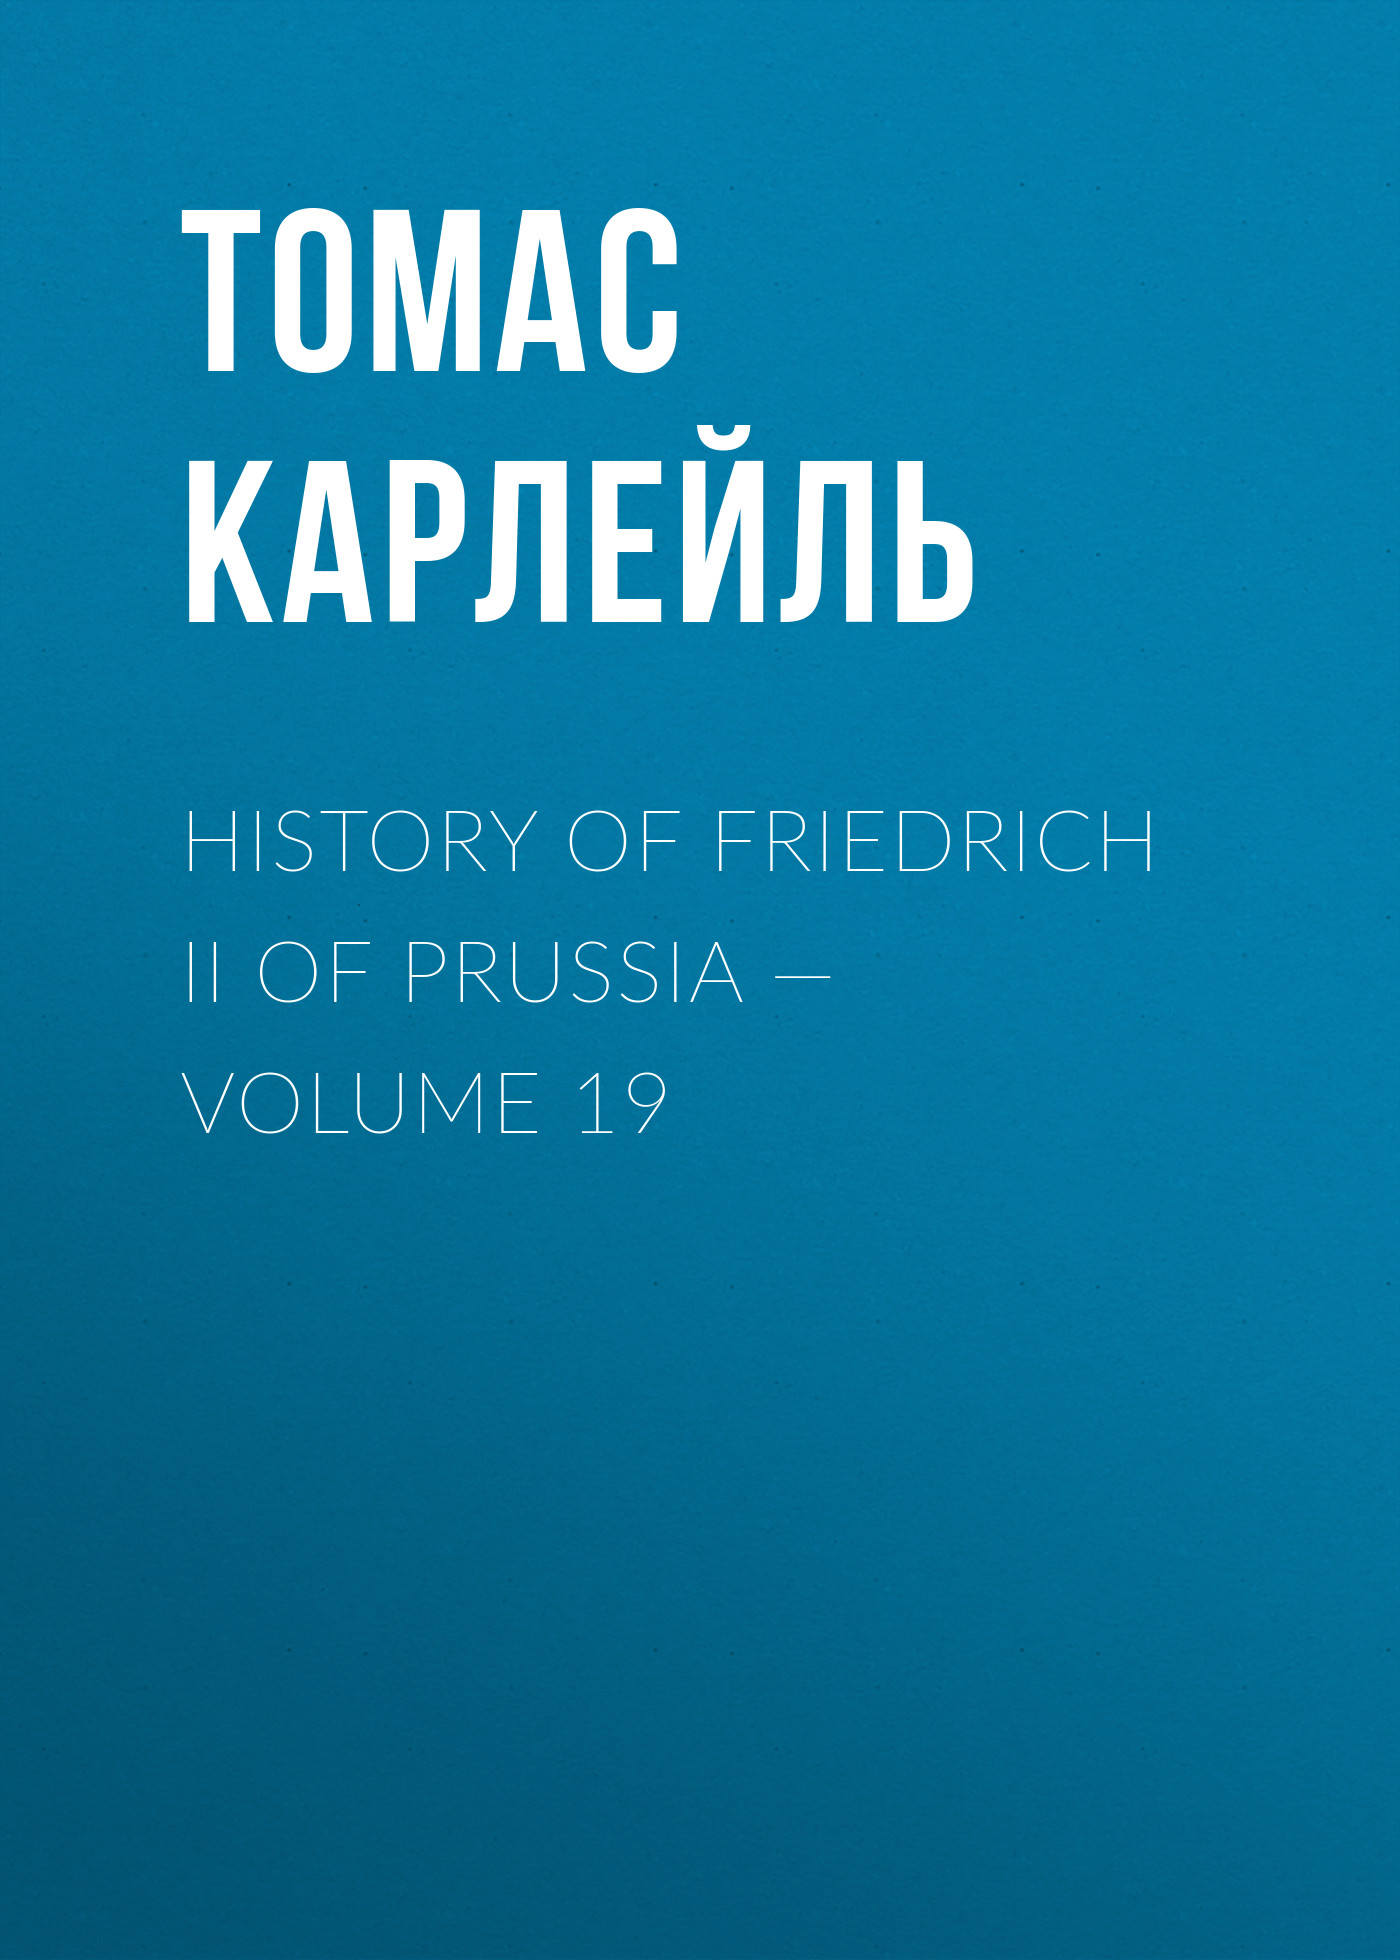 History of Friedrich II of Prussia— Volume 19